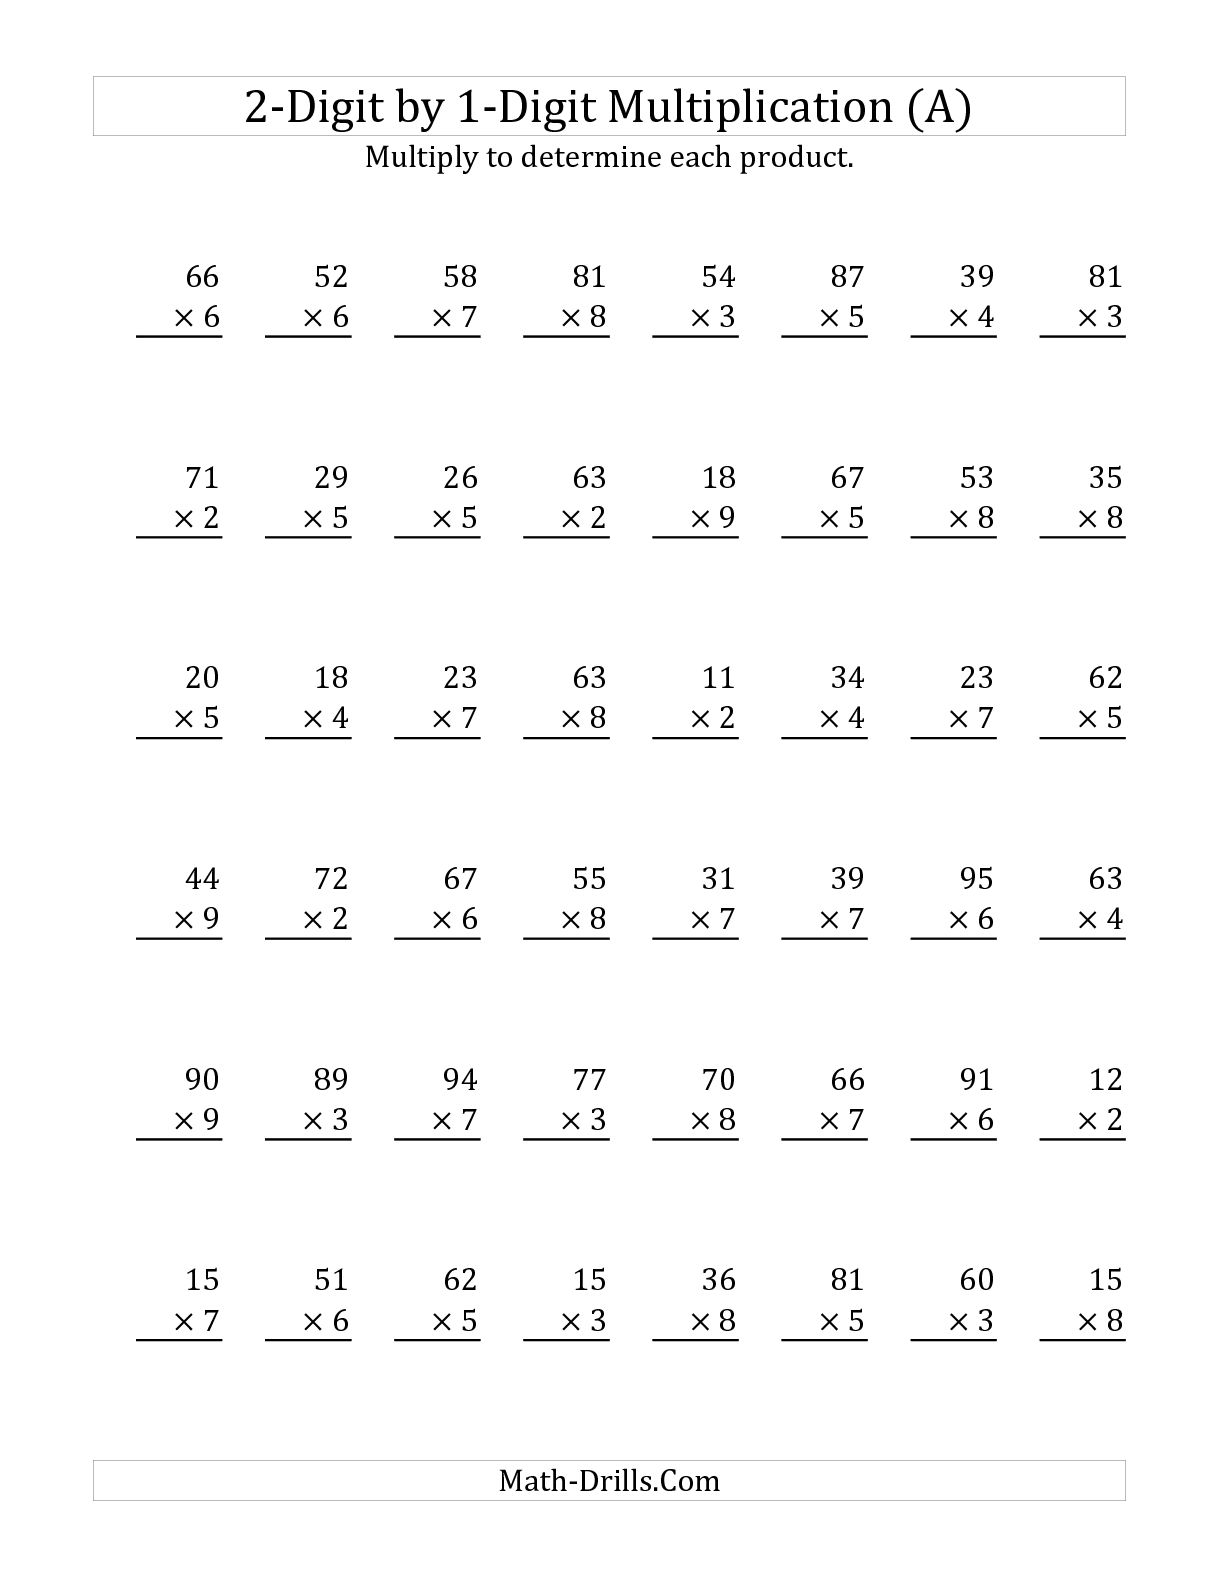 2-Digit by 1 Digit Multiplication Worksheets Image